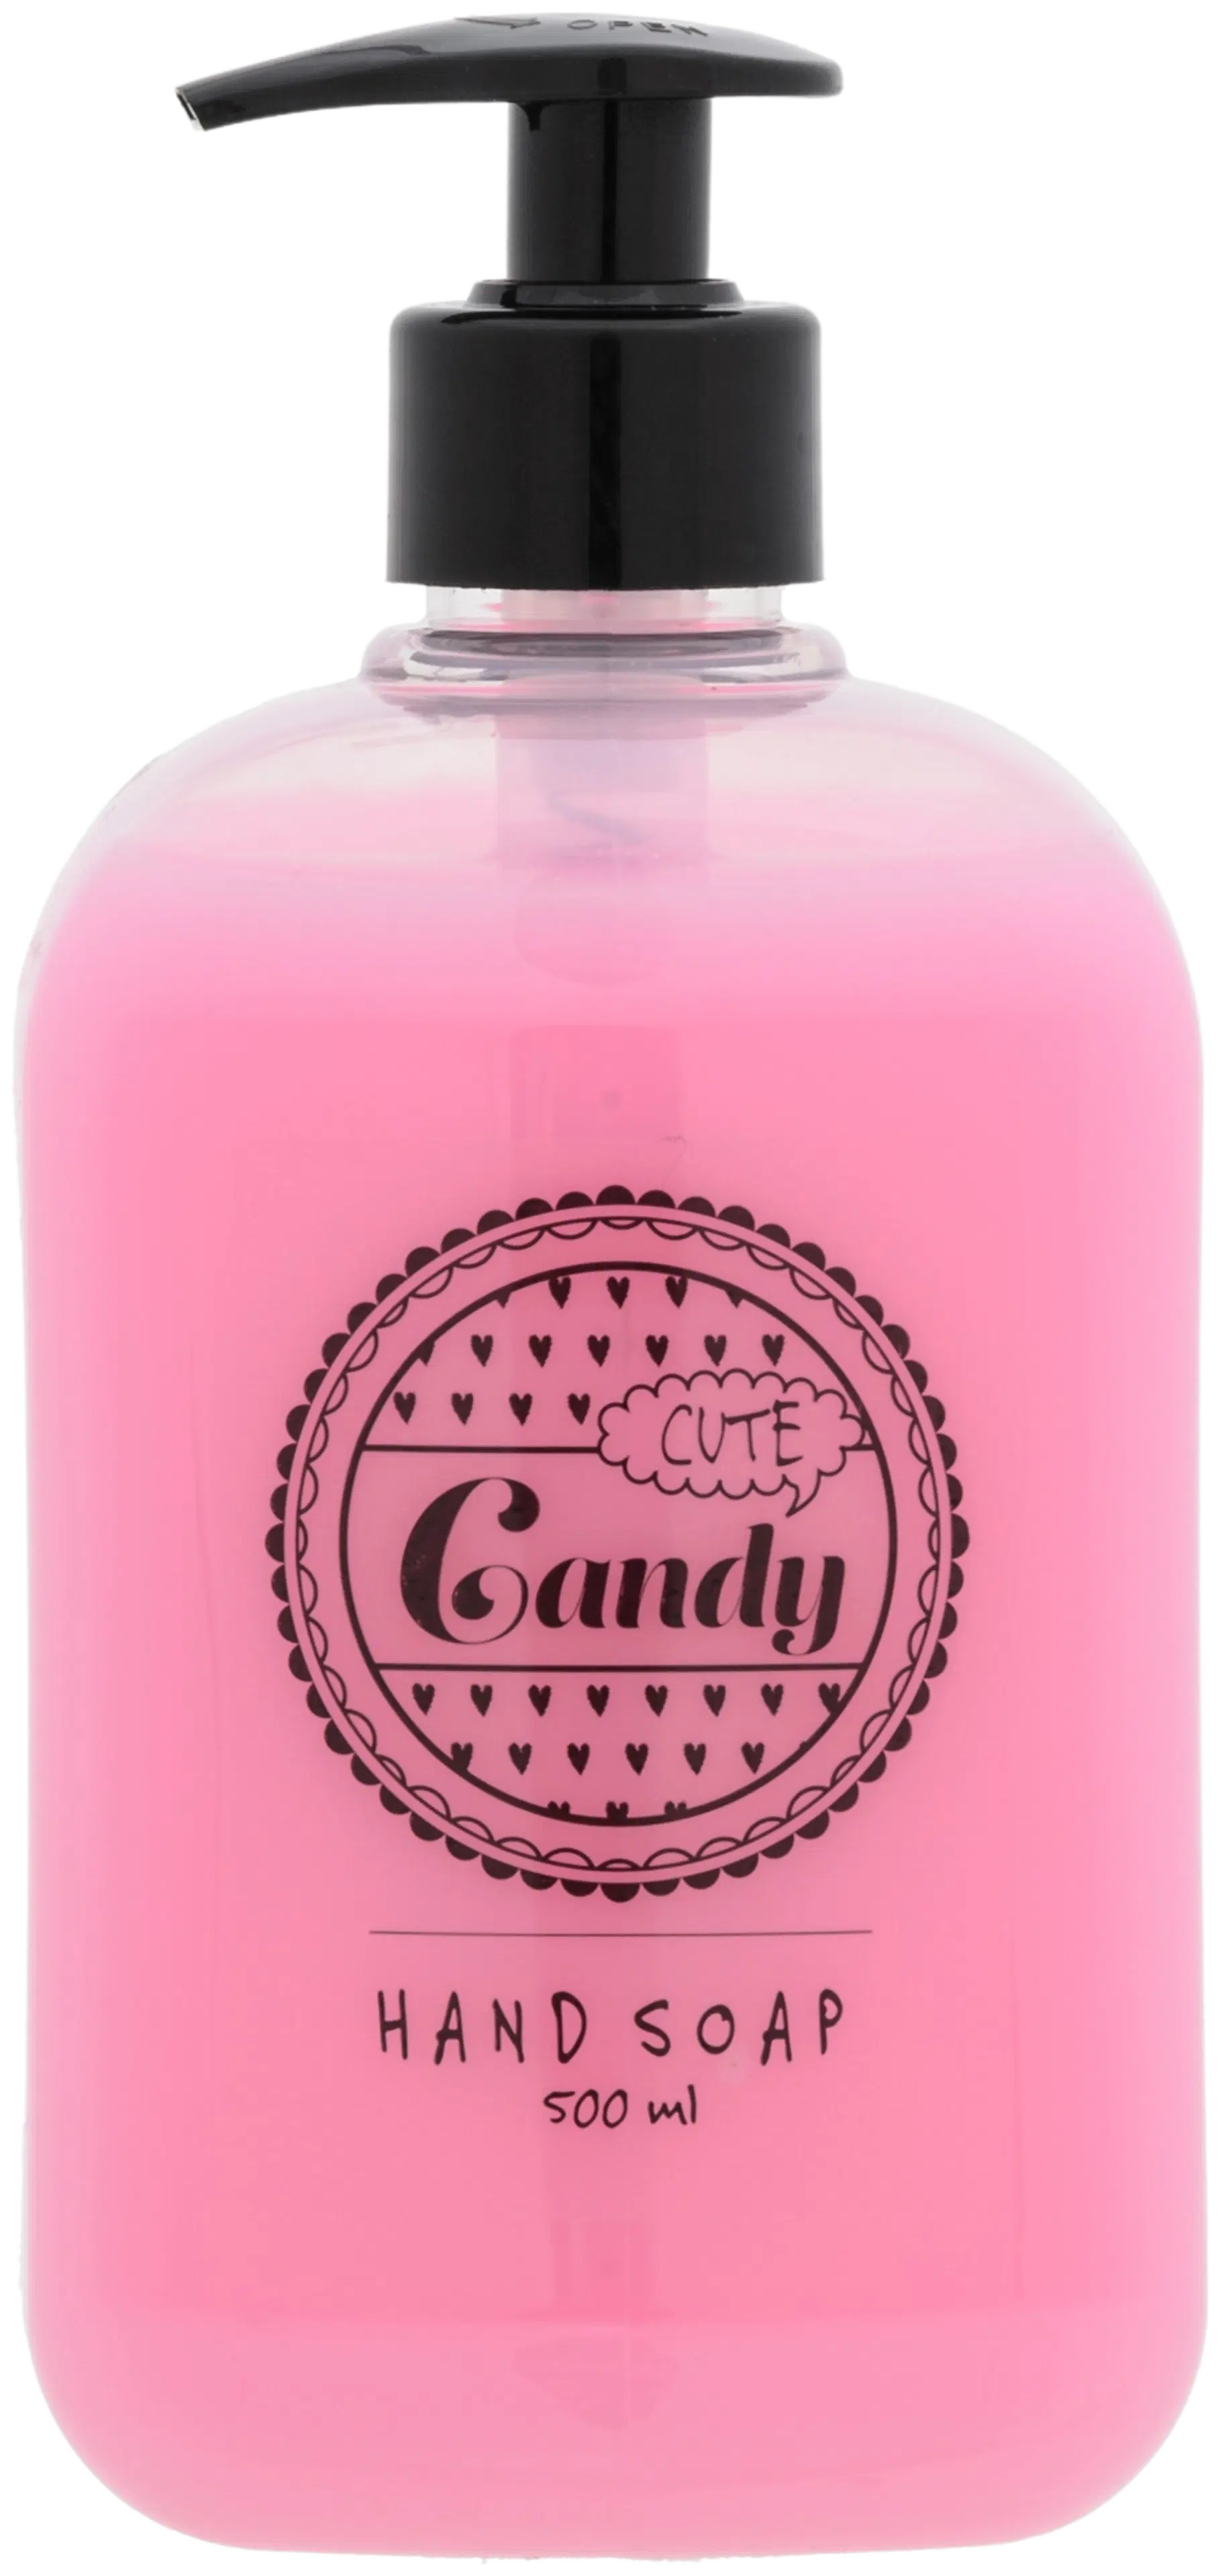 Candy nestesaippua Pink Candy 500 ml